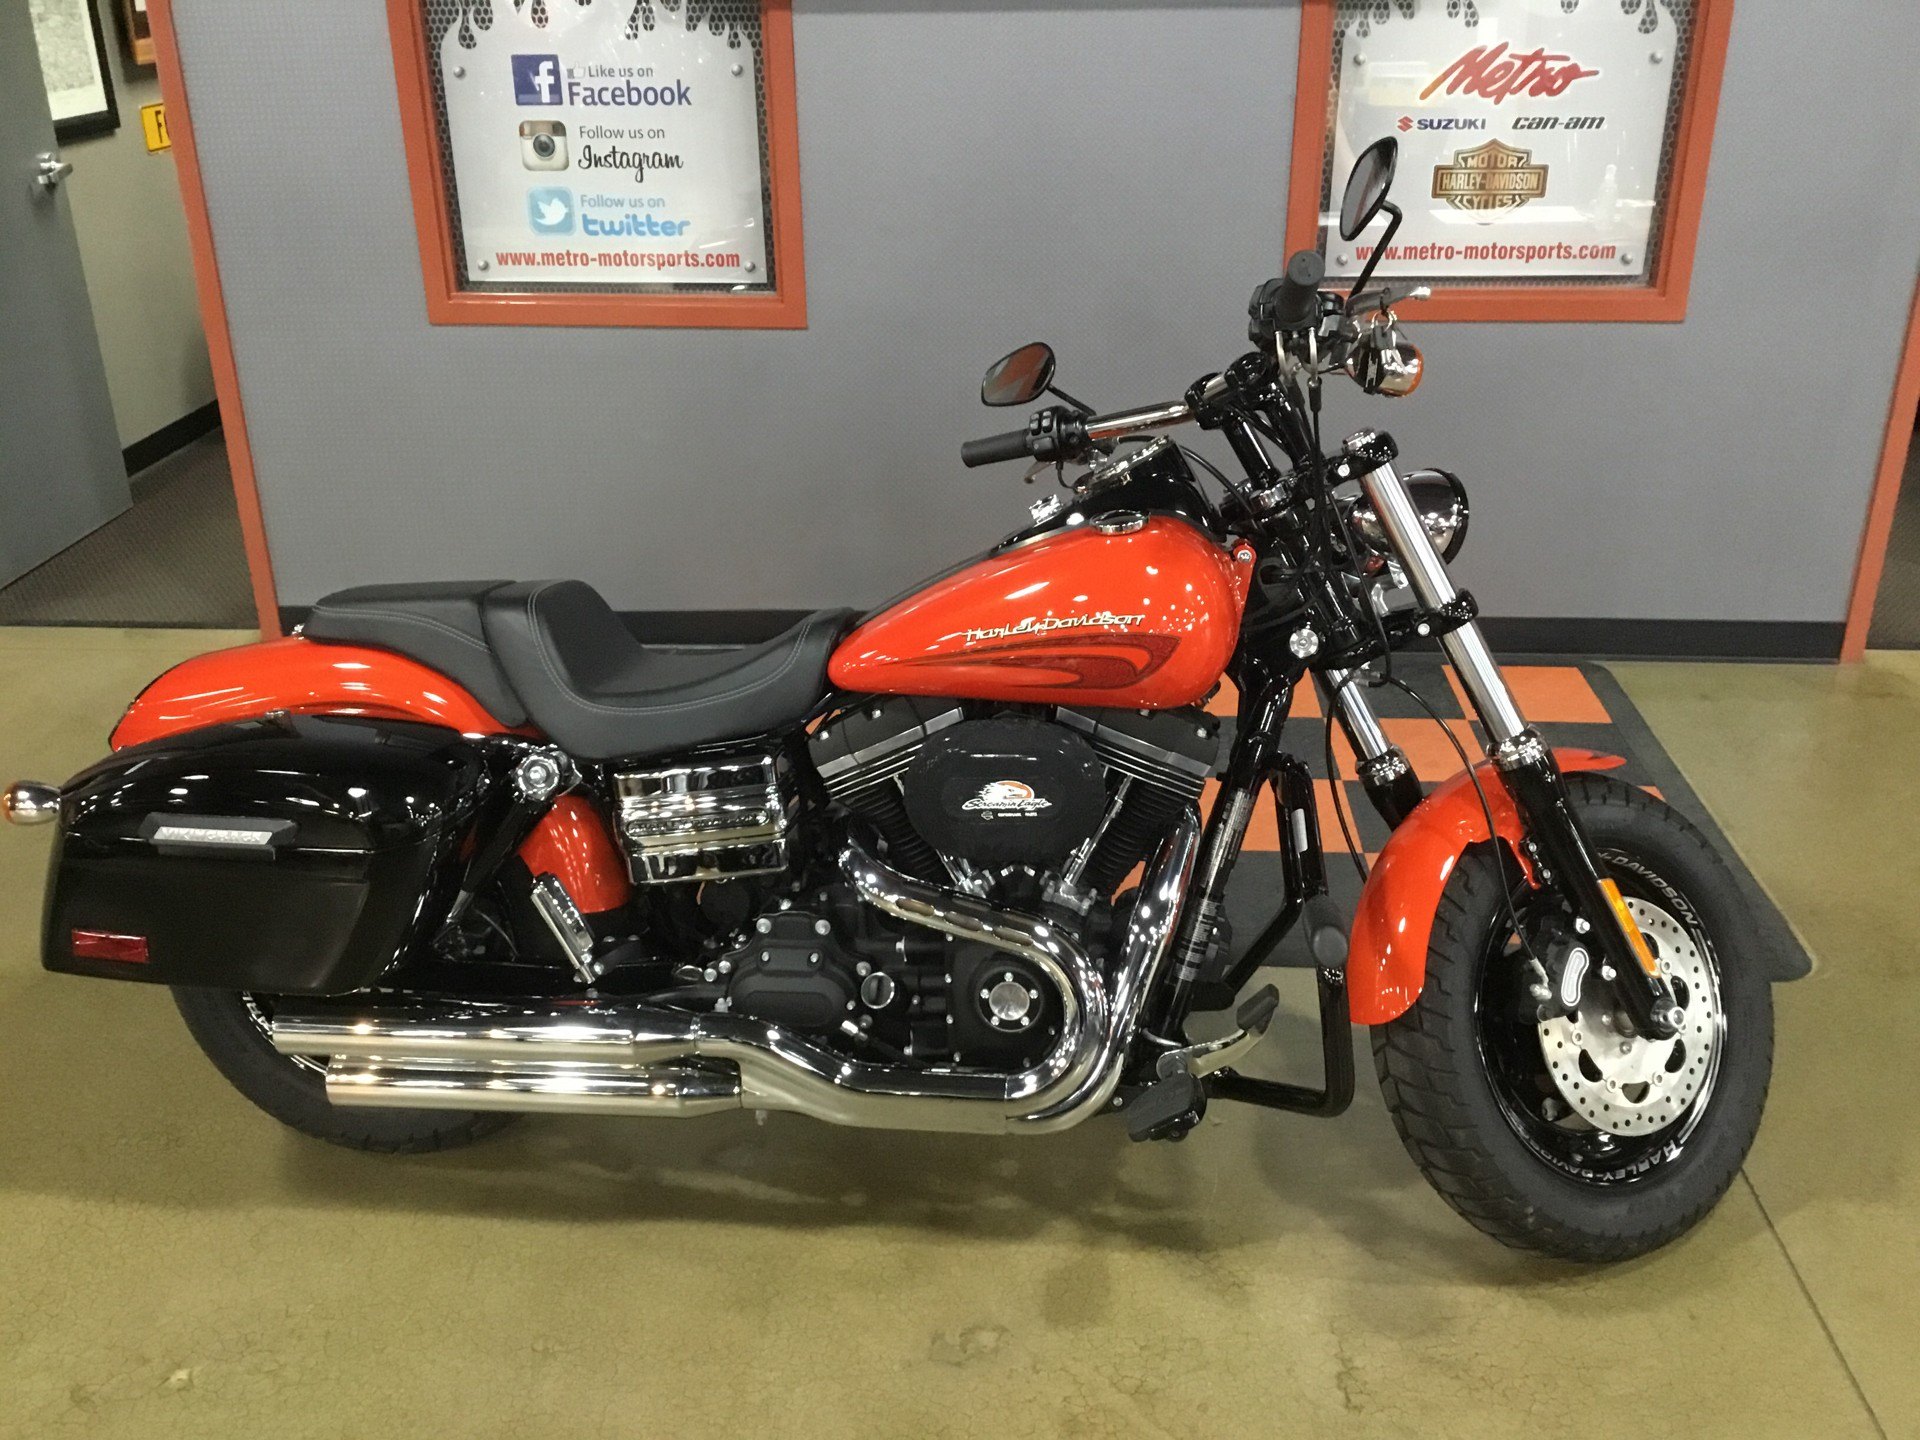 Used 17 Harley Davidson Fat Bob Vivid Black Motorcycles In Cedar Rapids Ia a